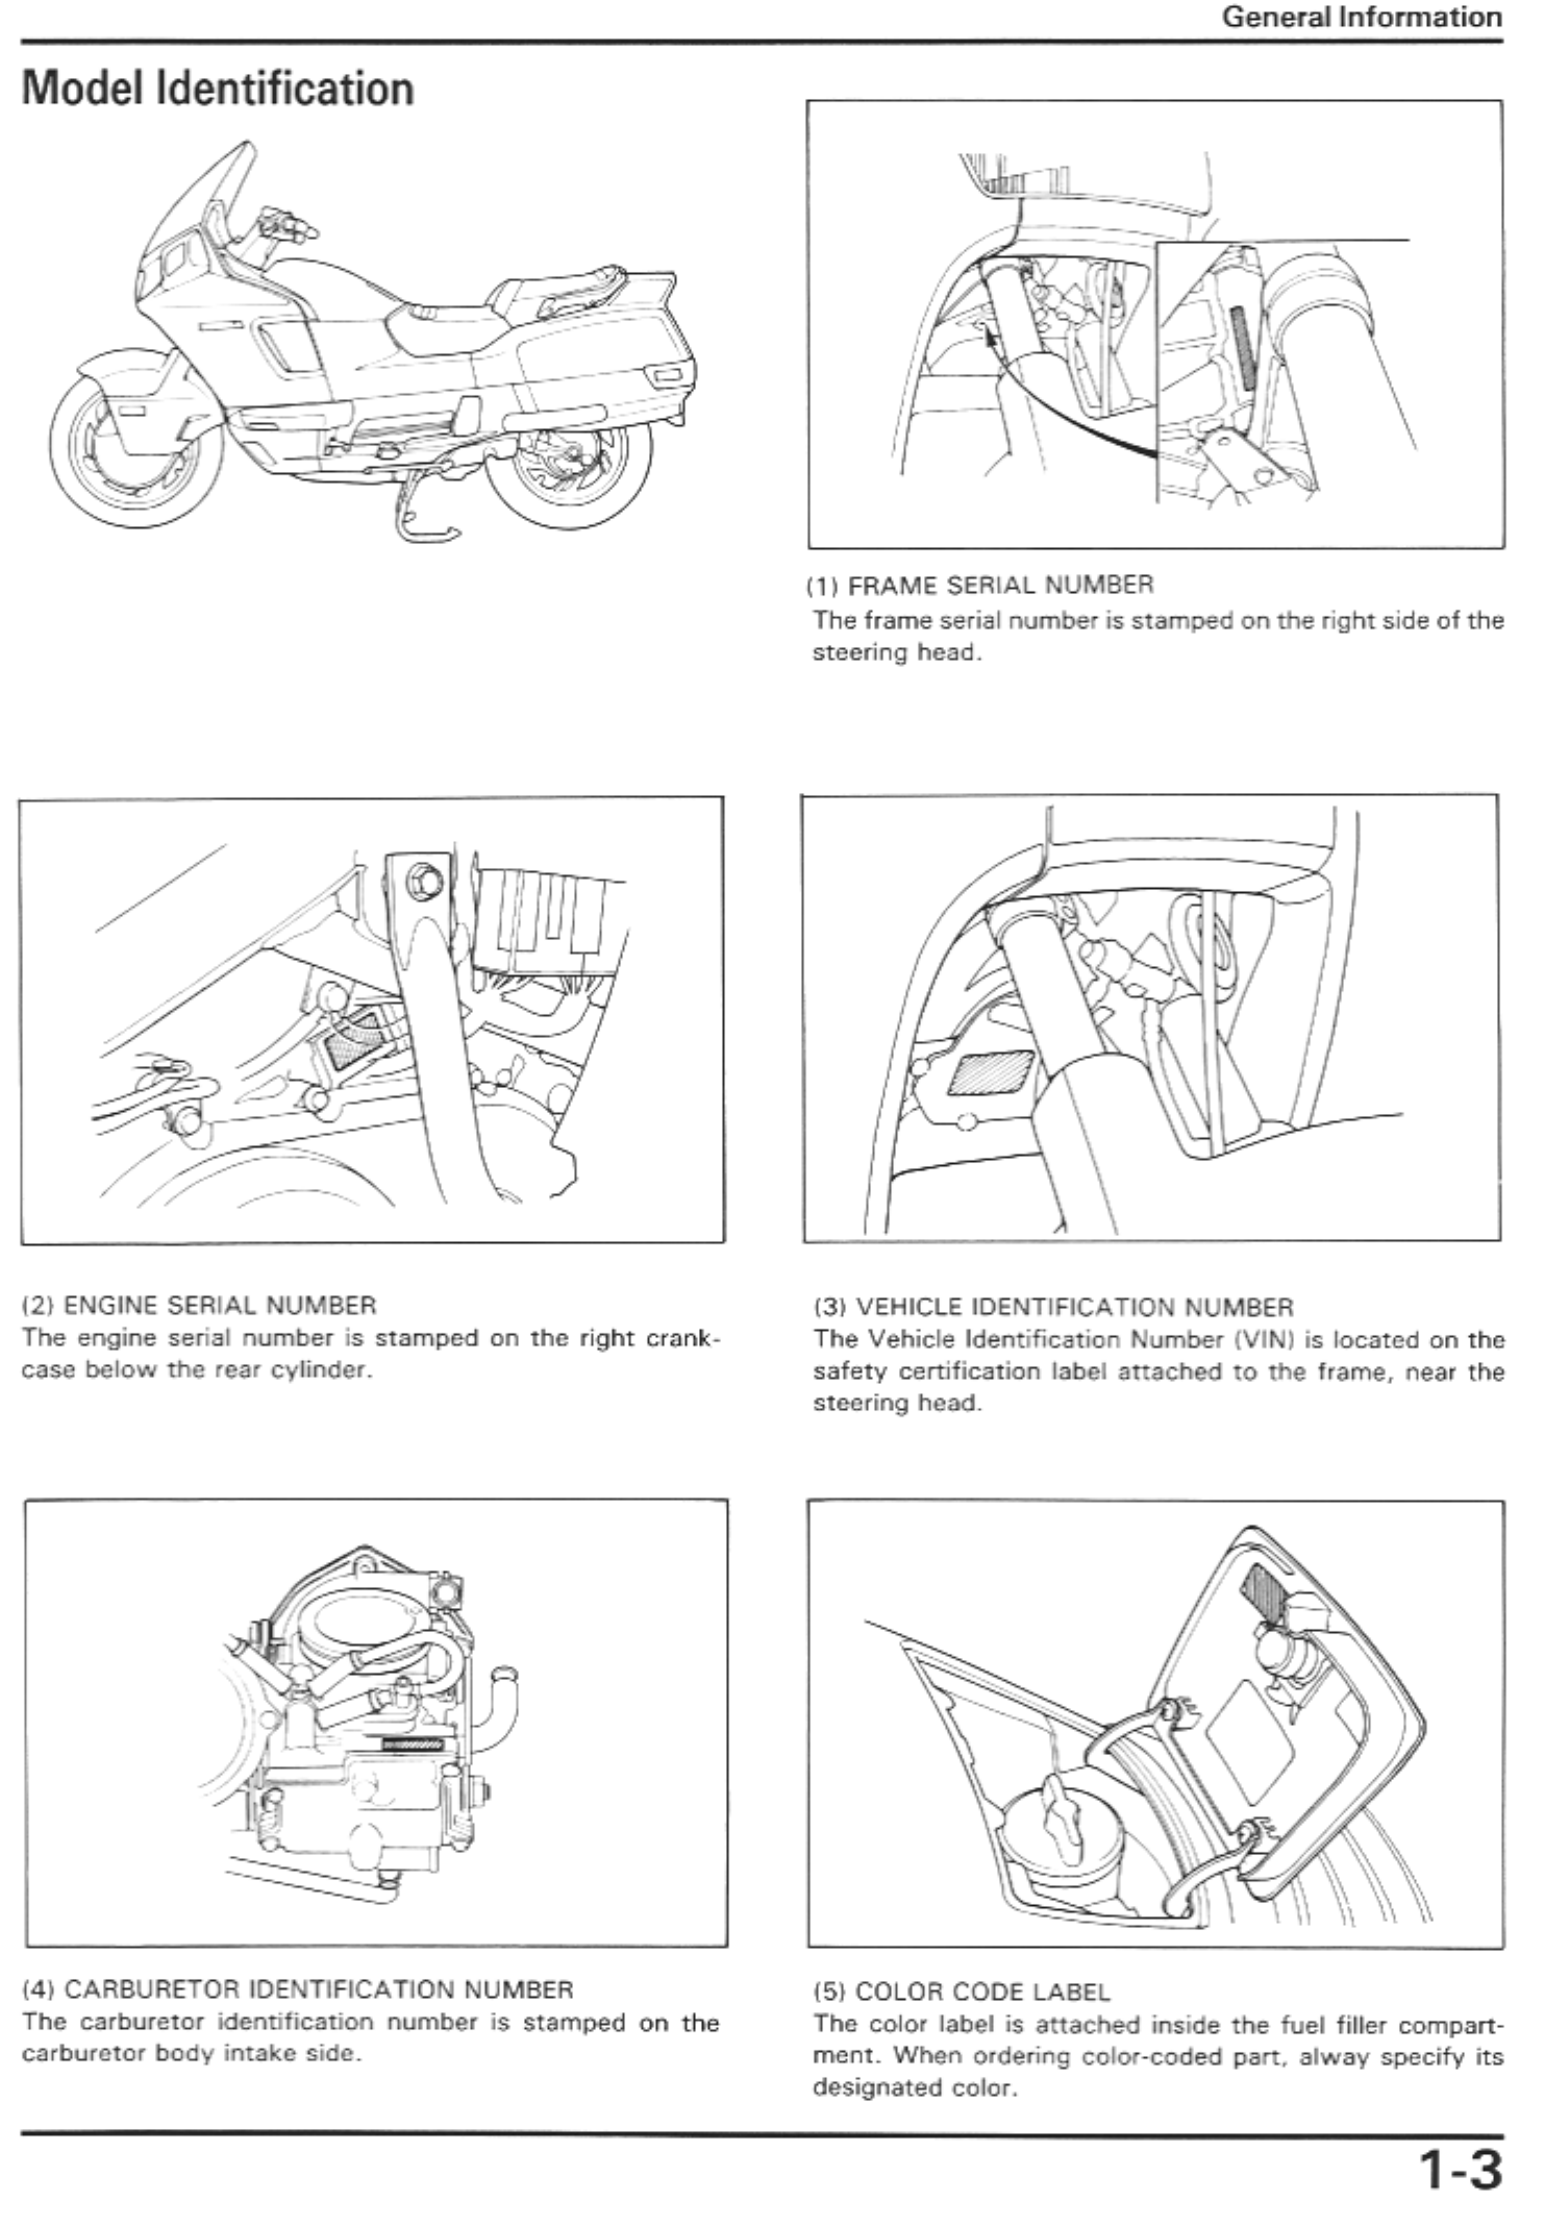 1989-1996 Honda PC800 Pacific Coast service manual Preview image 2